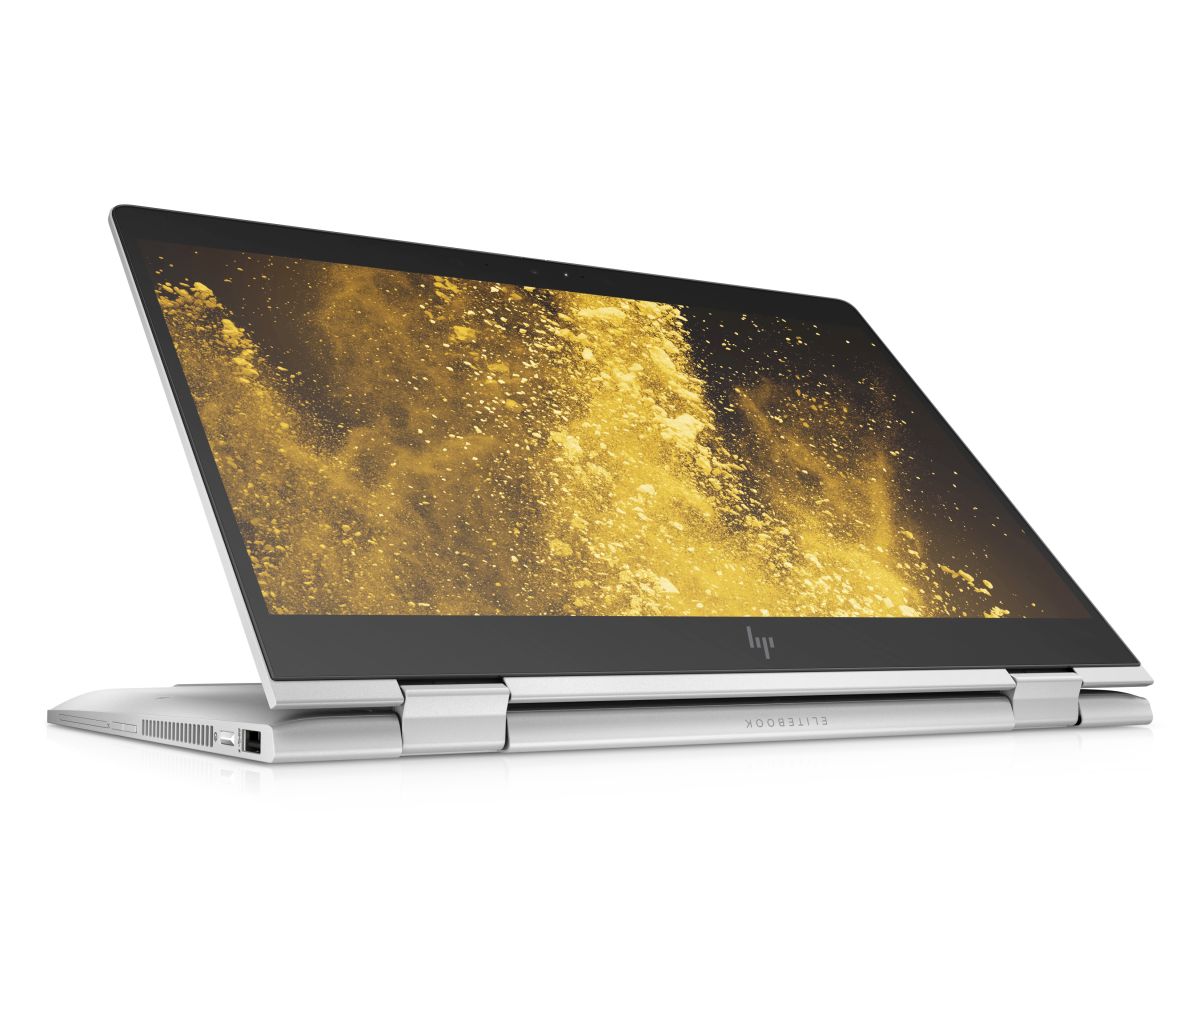 HP EliteBook x360 830 G6 (7KN16EA)